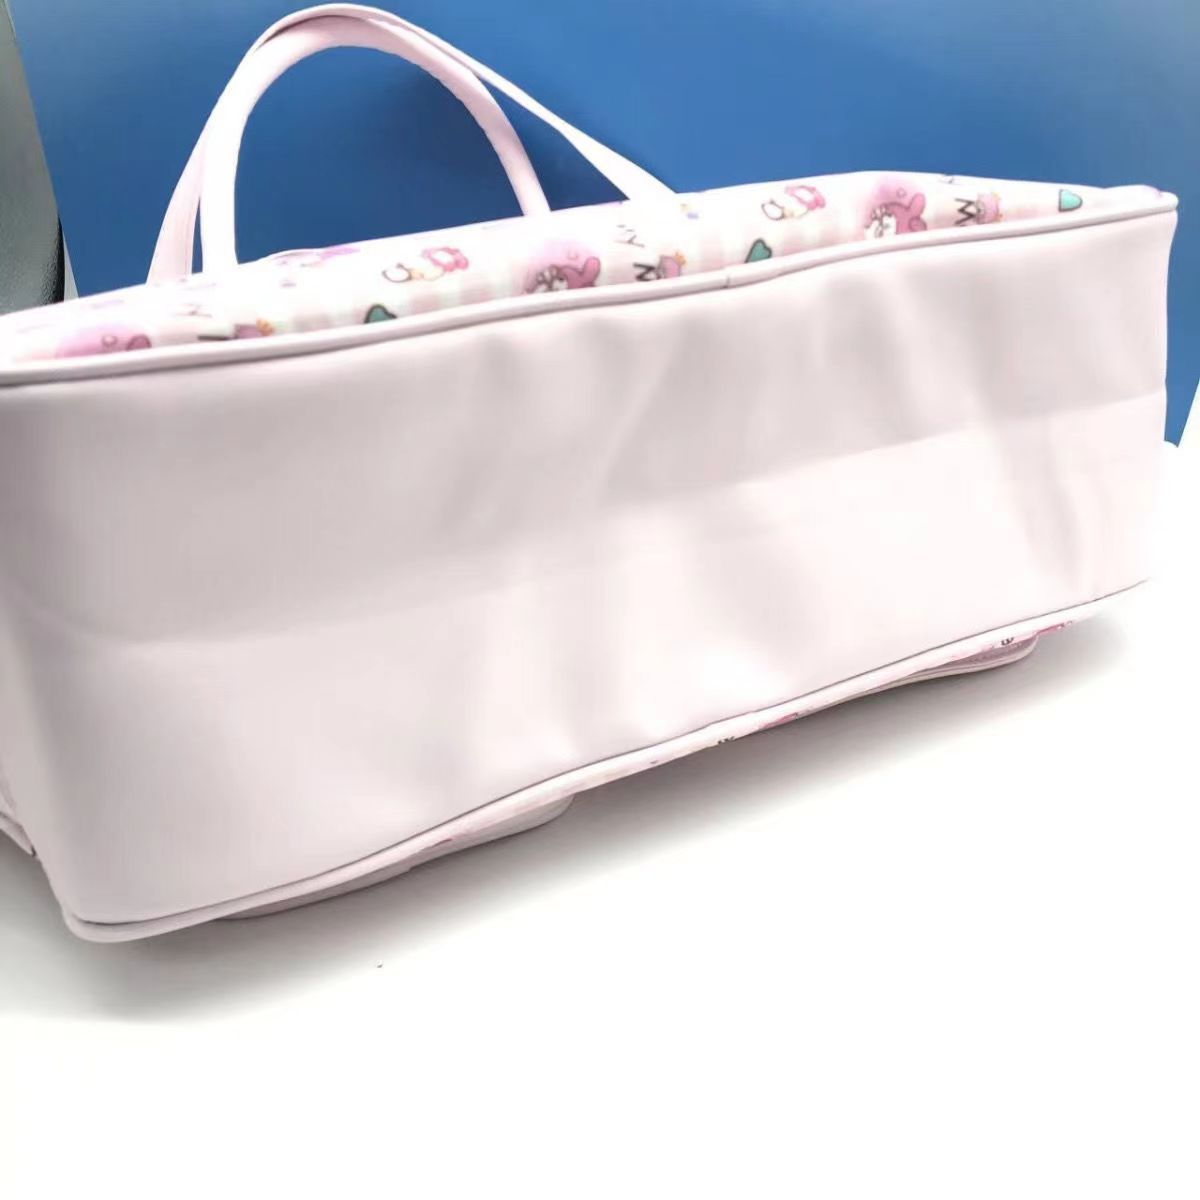 Japanese Harajuku style lolita sweet cartoon soft girl PU leather large capacity portable handbag travel bag toiletry bag